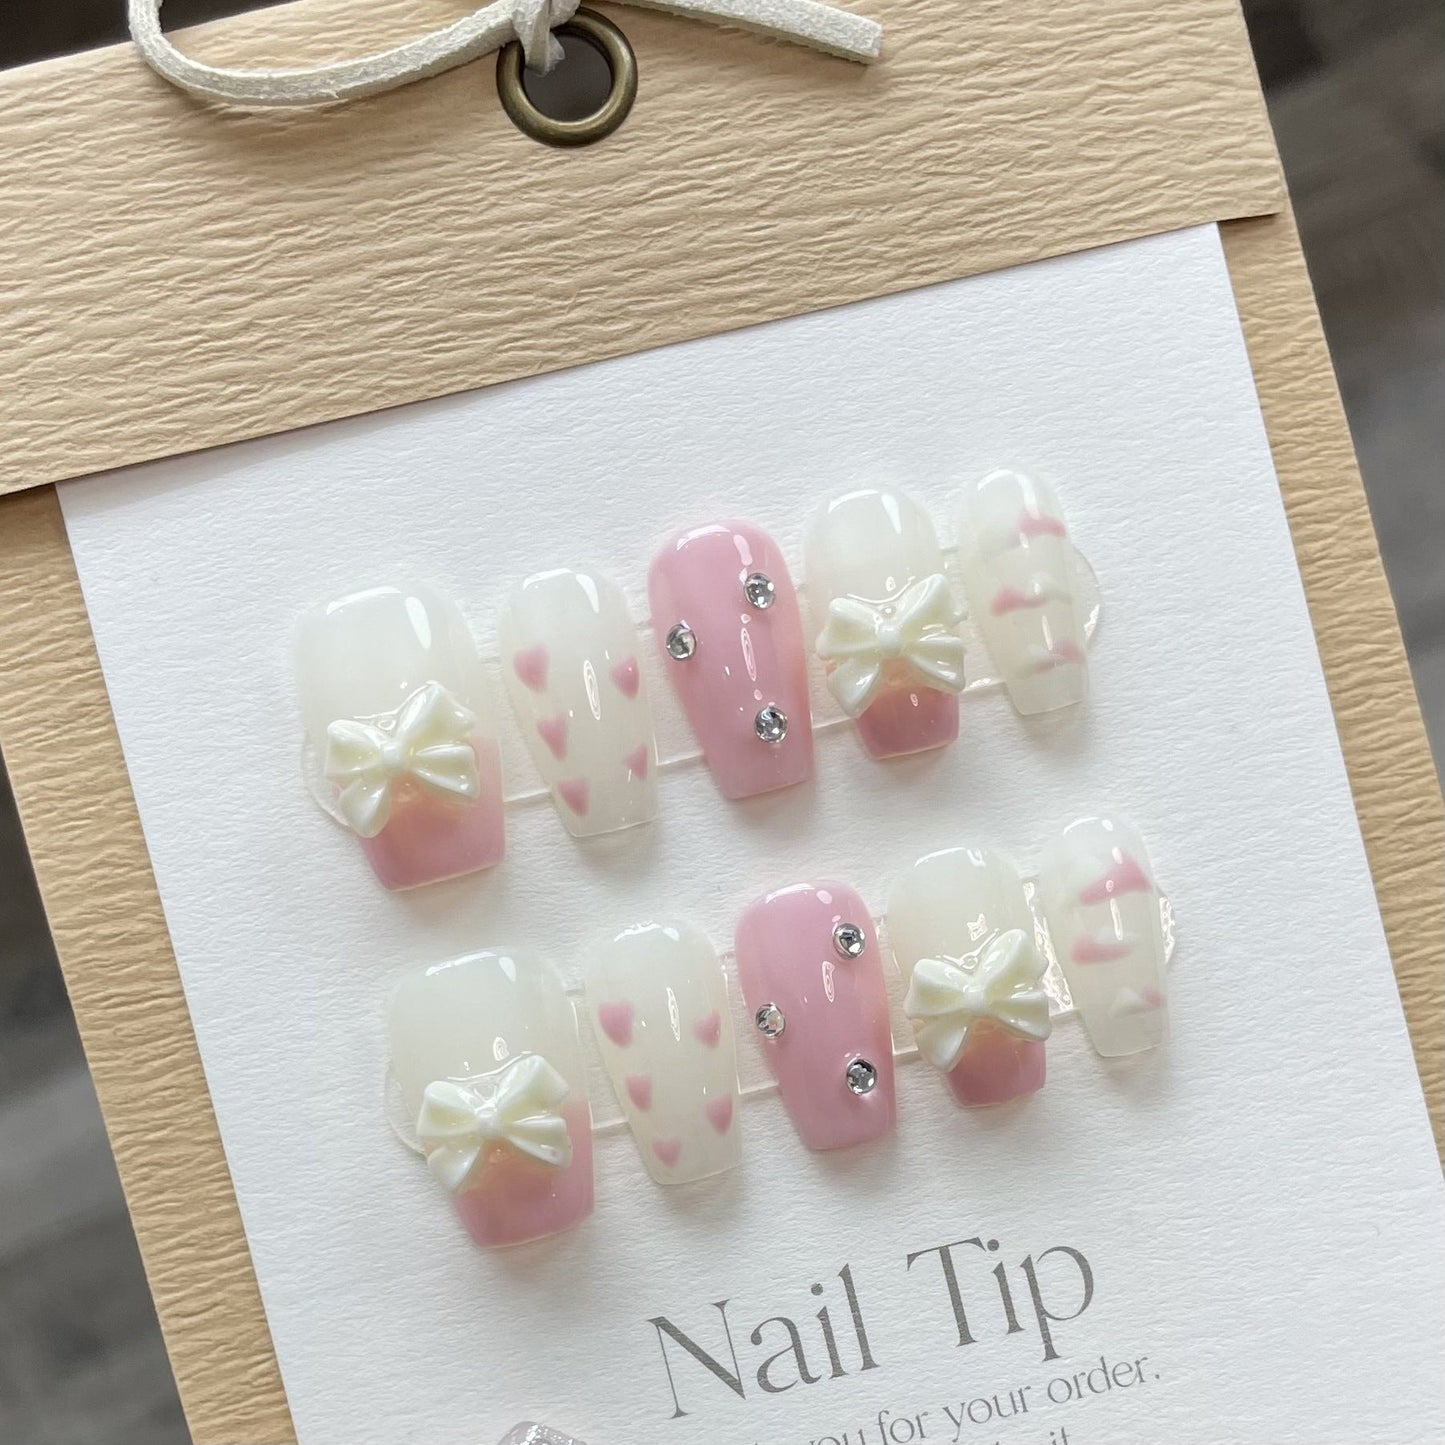 738 princess style press on nails 100% handmade false nails white pink